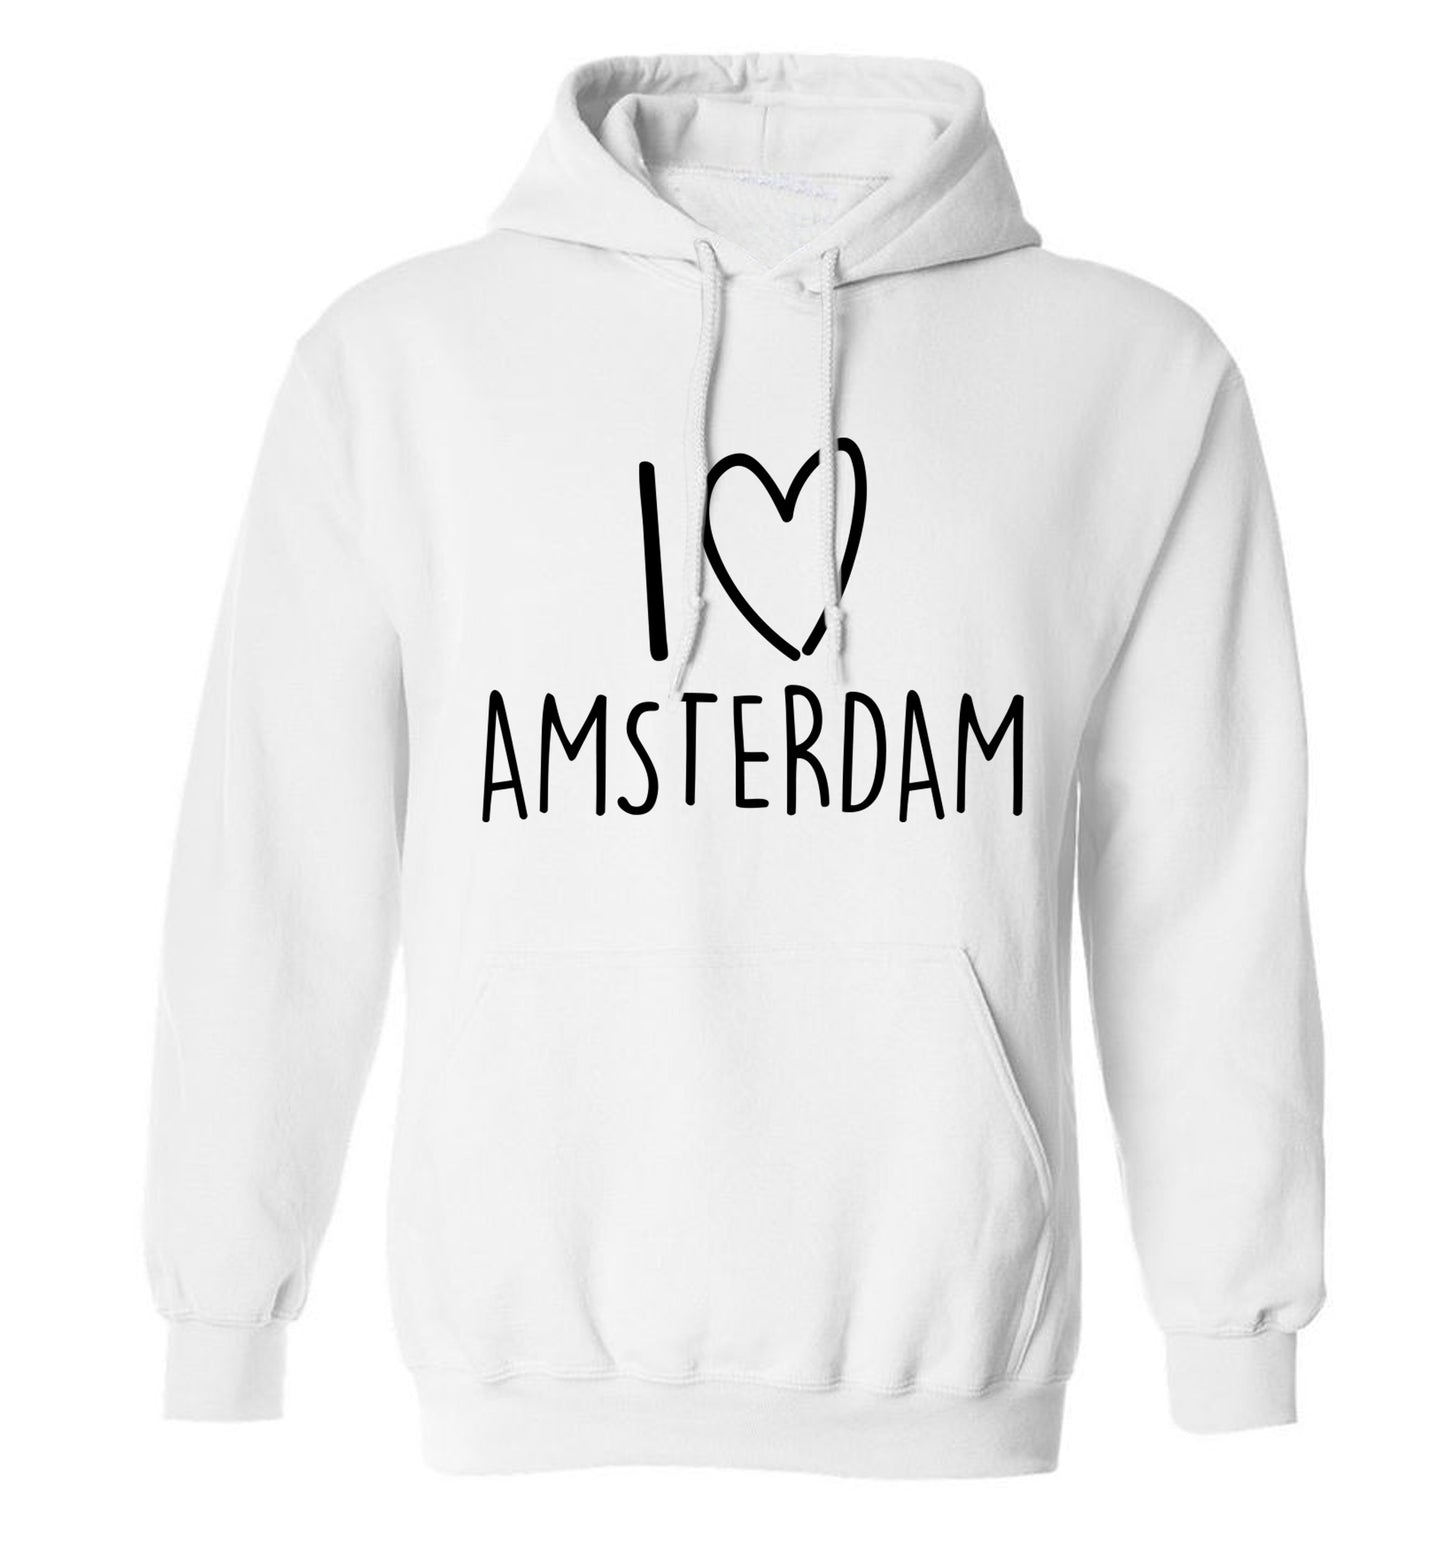 I love Amsterdam adults unisex white hoodie 2XL